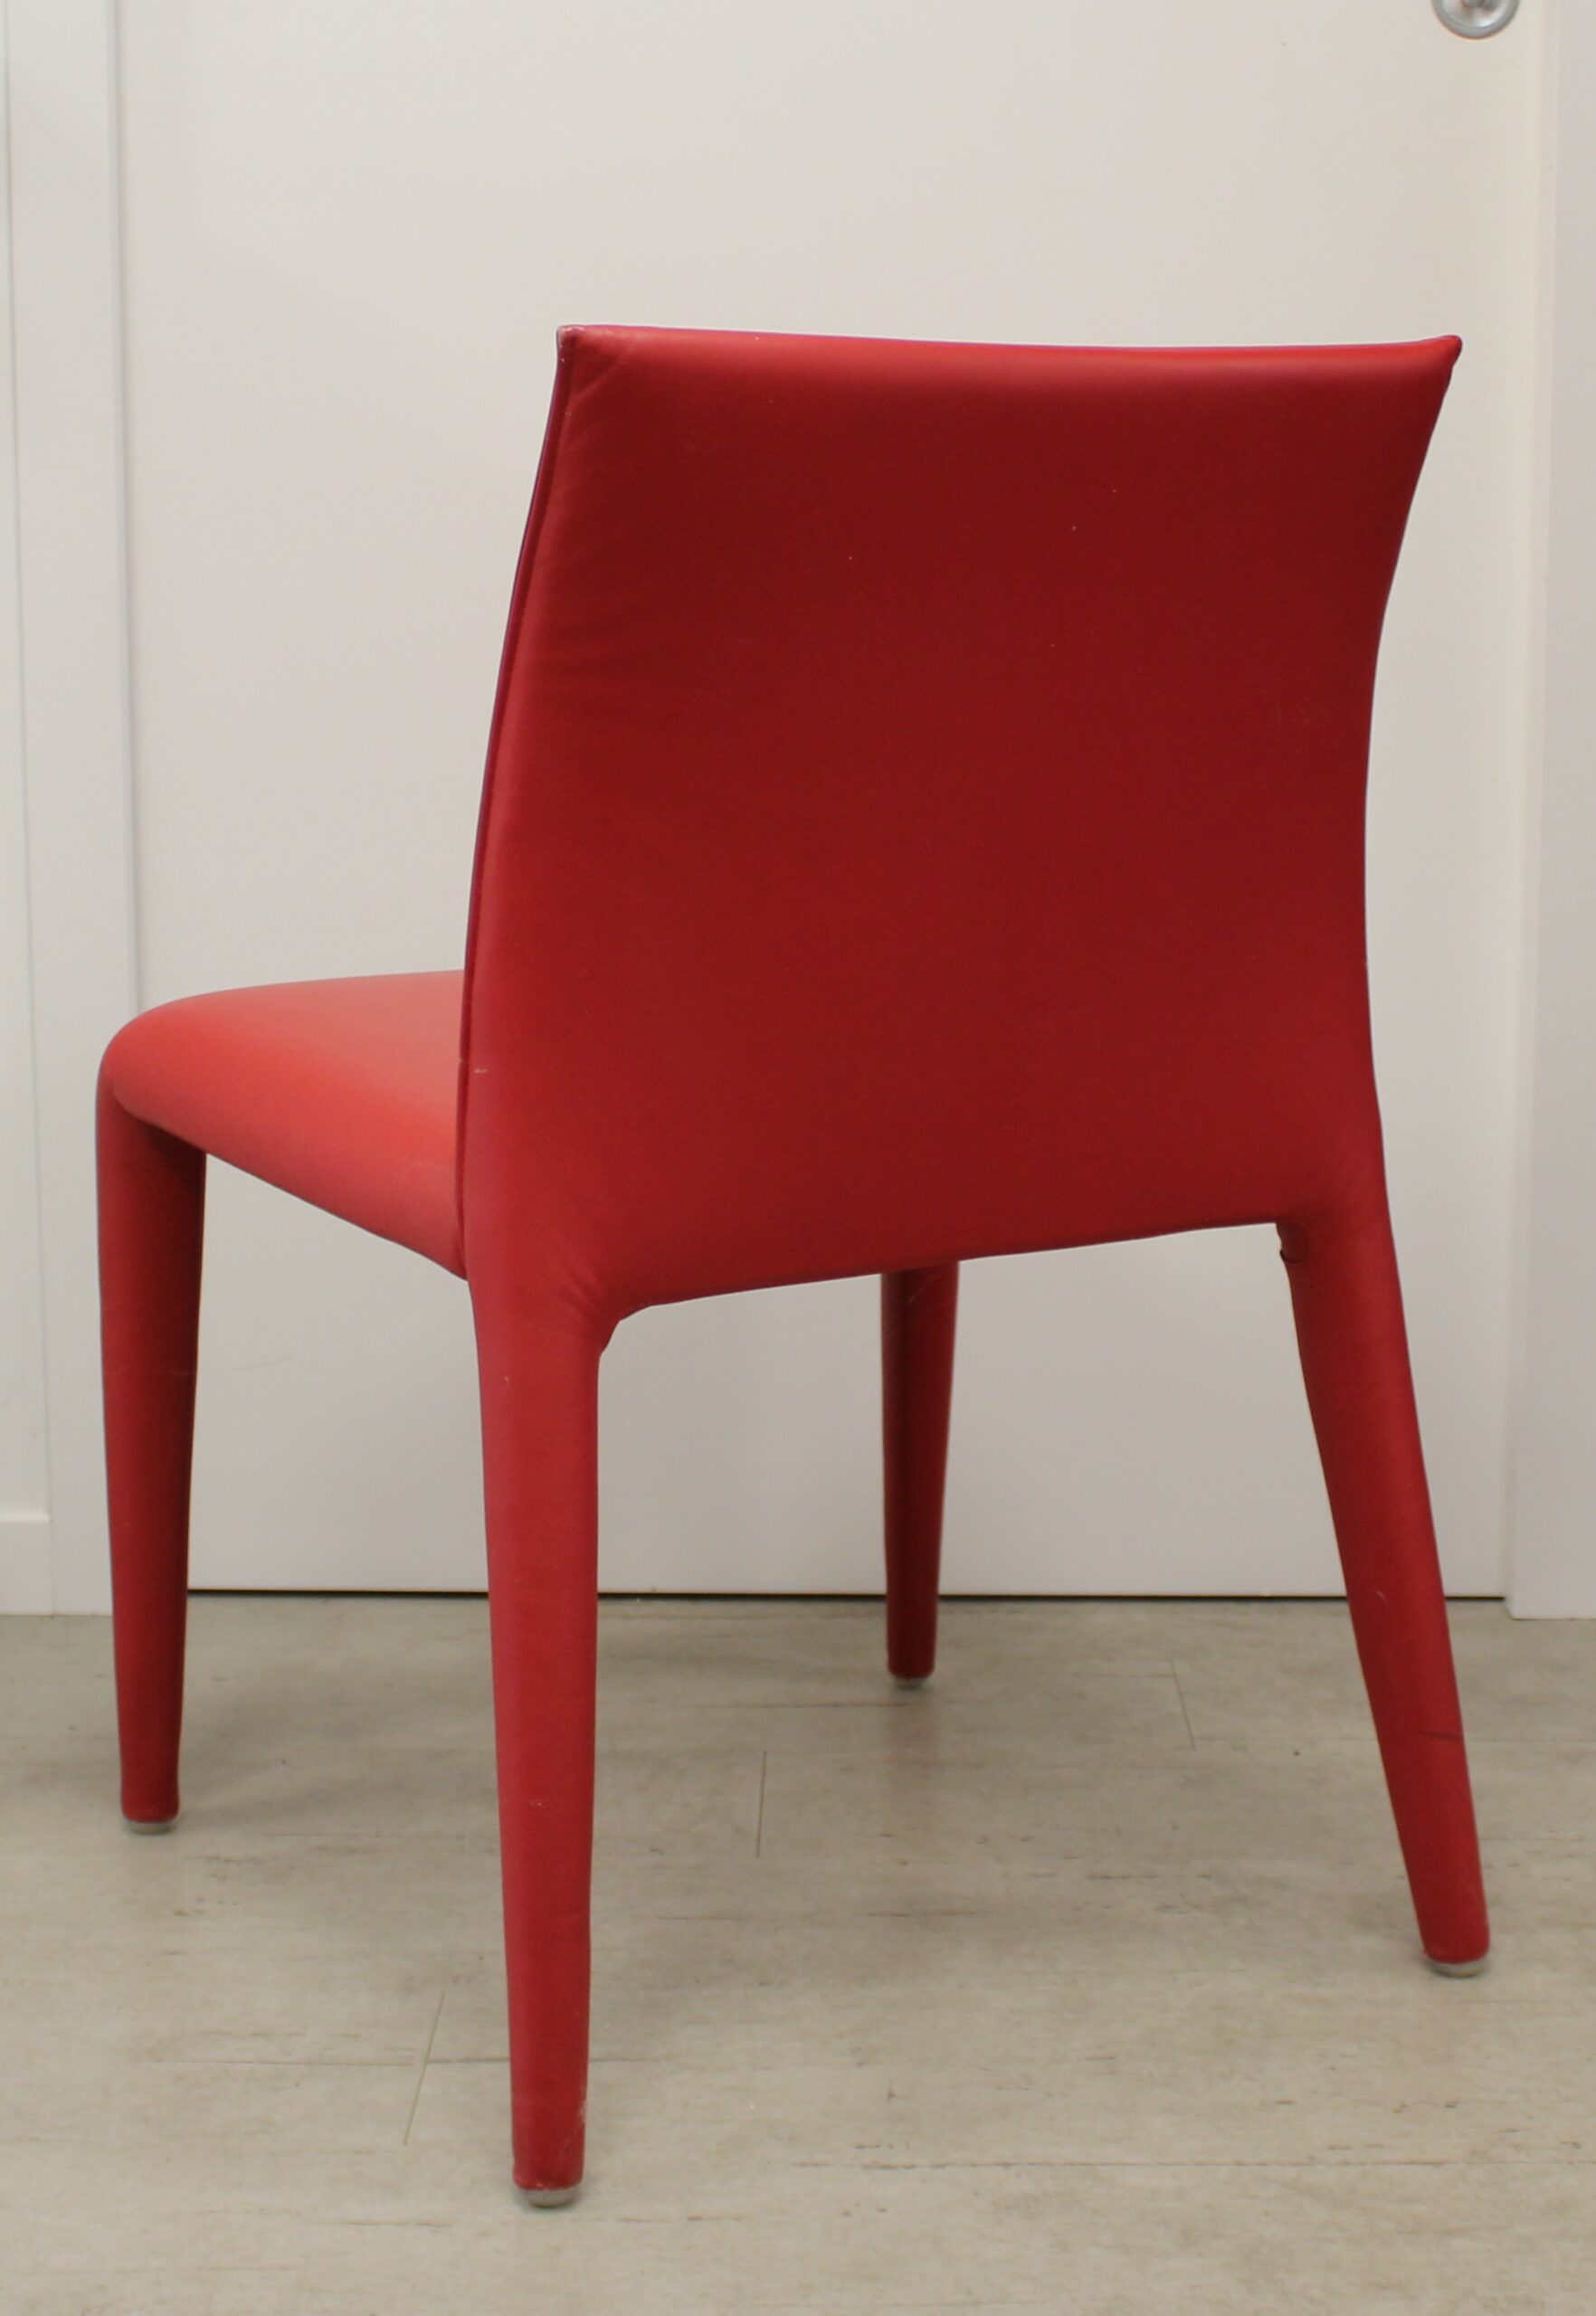 Chaise-cuir1 rouge Vol au vent - Designer-Mario Bellini-Occasion 1ère catégorie